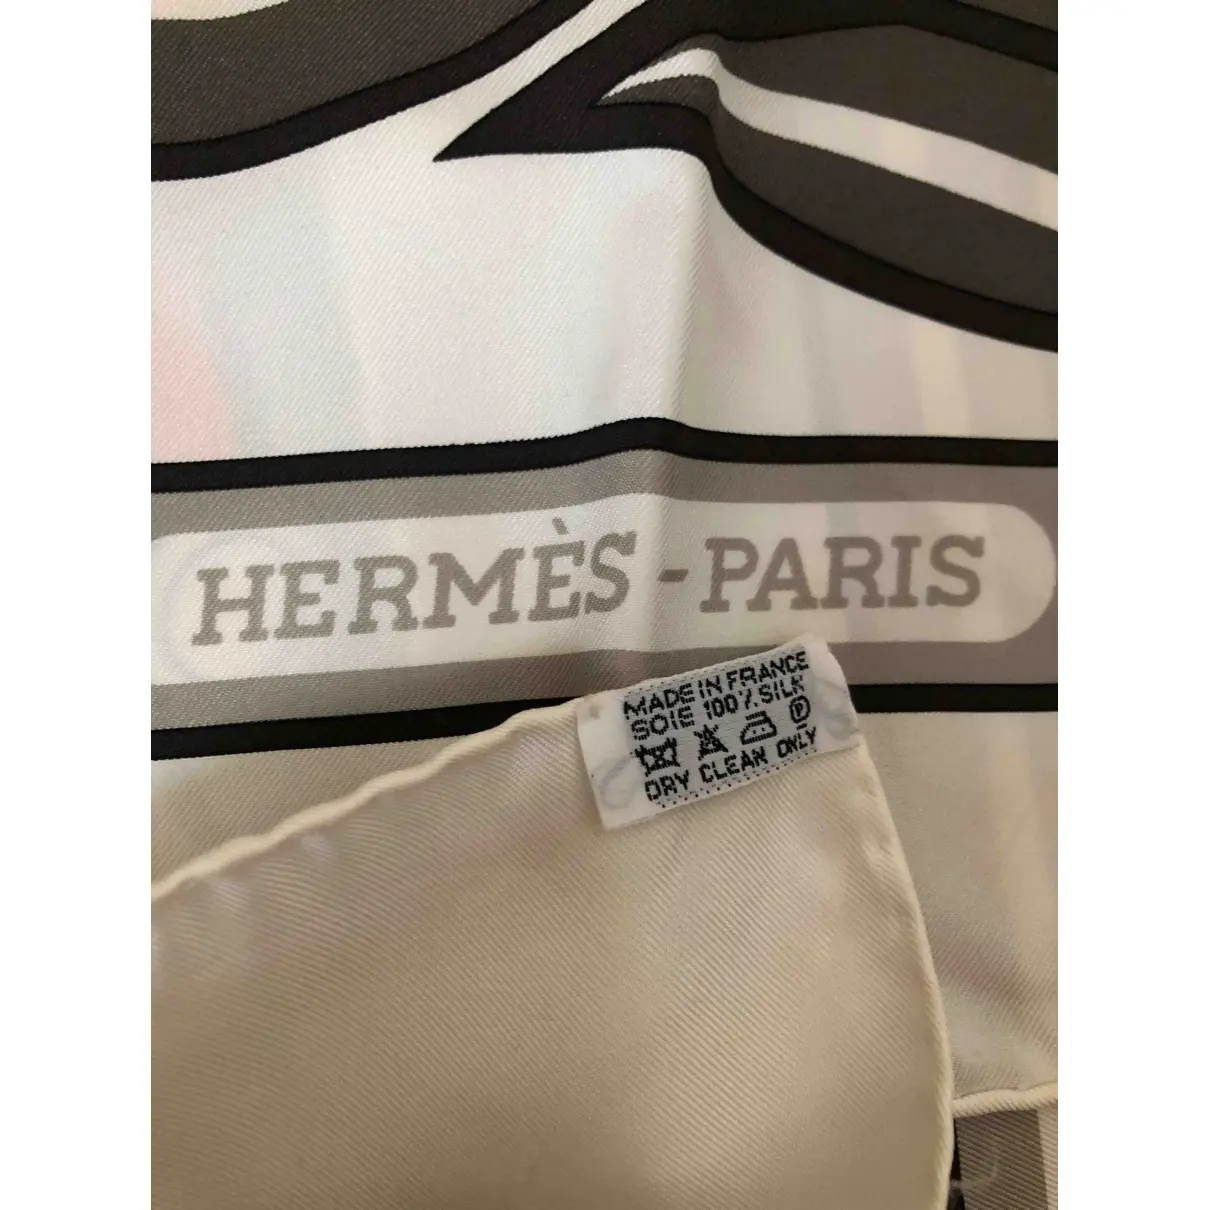 Buy Hermès Silk neckerchief online - Vintage